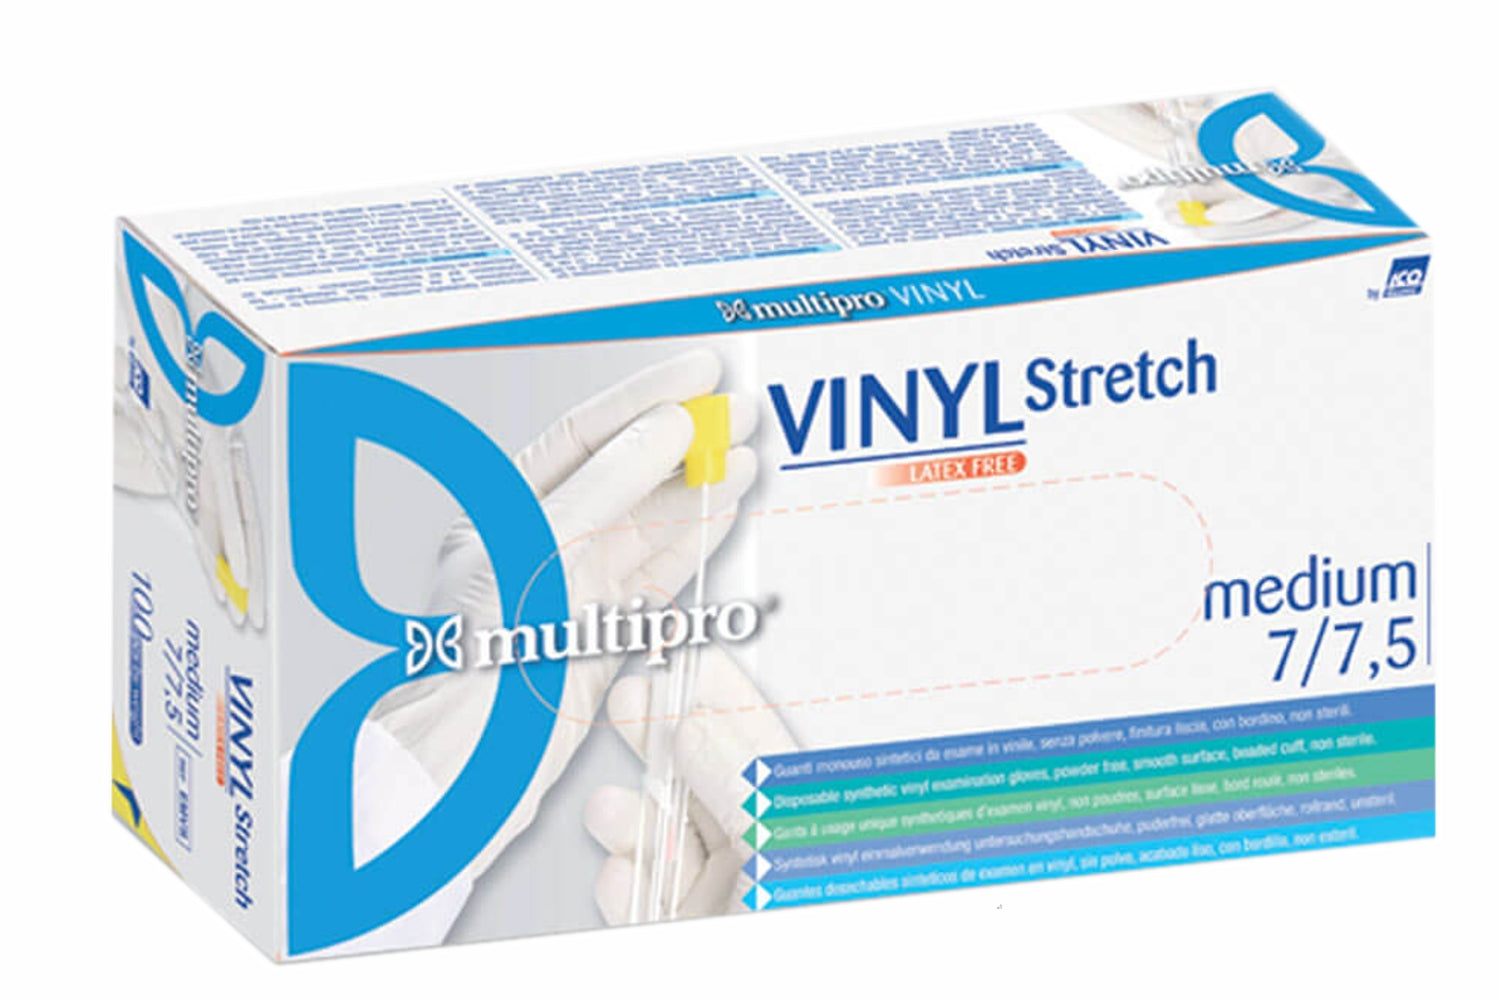 Vinyl Stretch Multipro guanti monouso in vinile senza polvere icoguanti